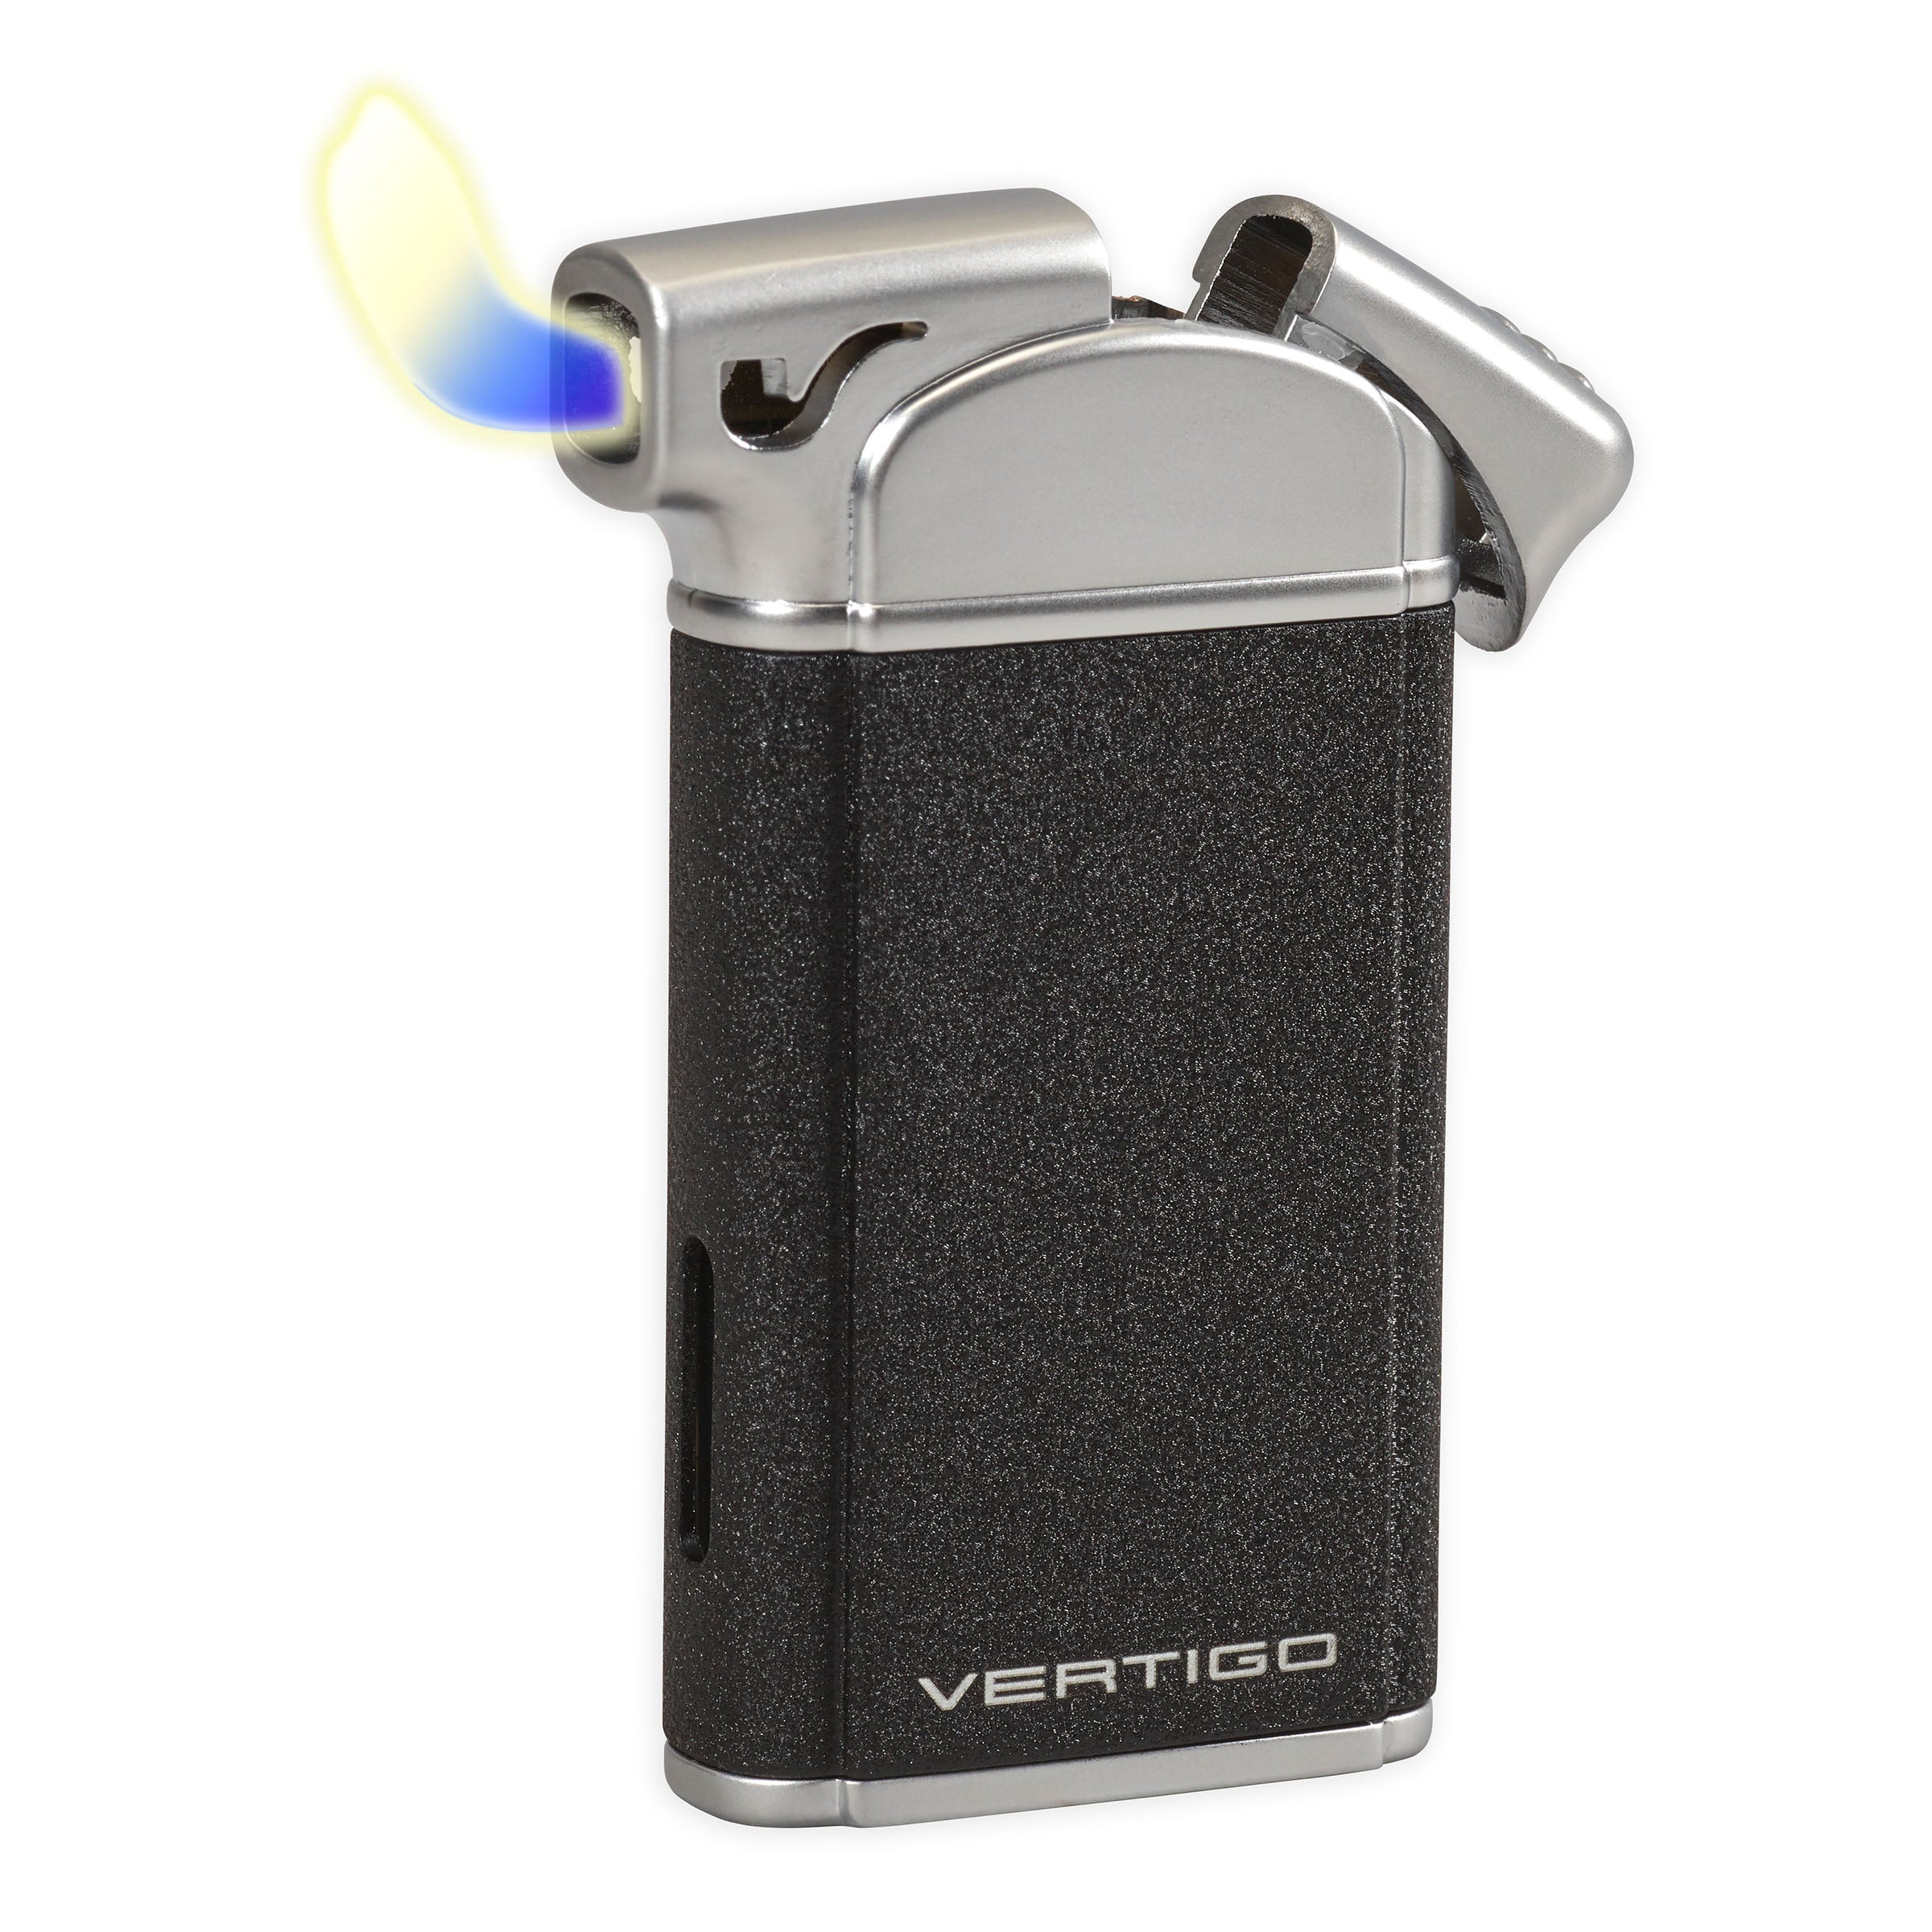 Vertigo Crosby Pipe Lighter